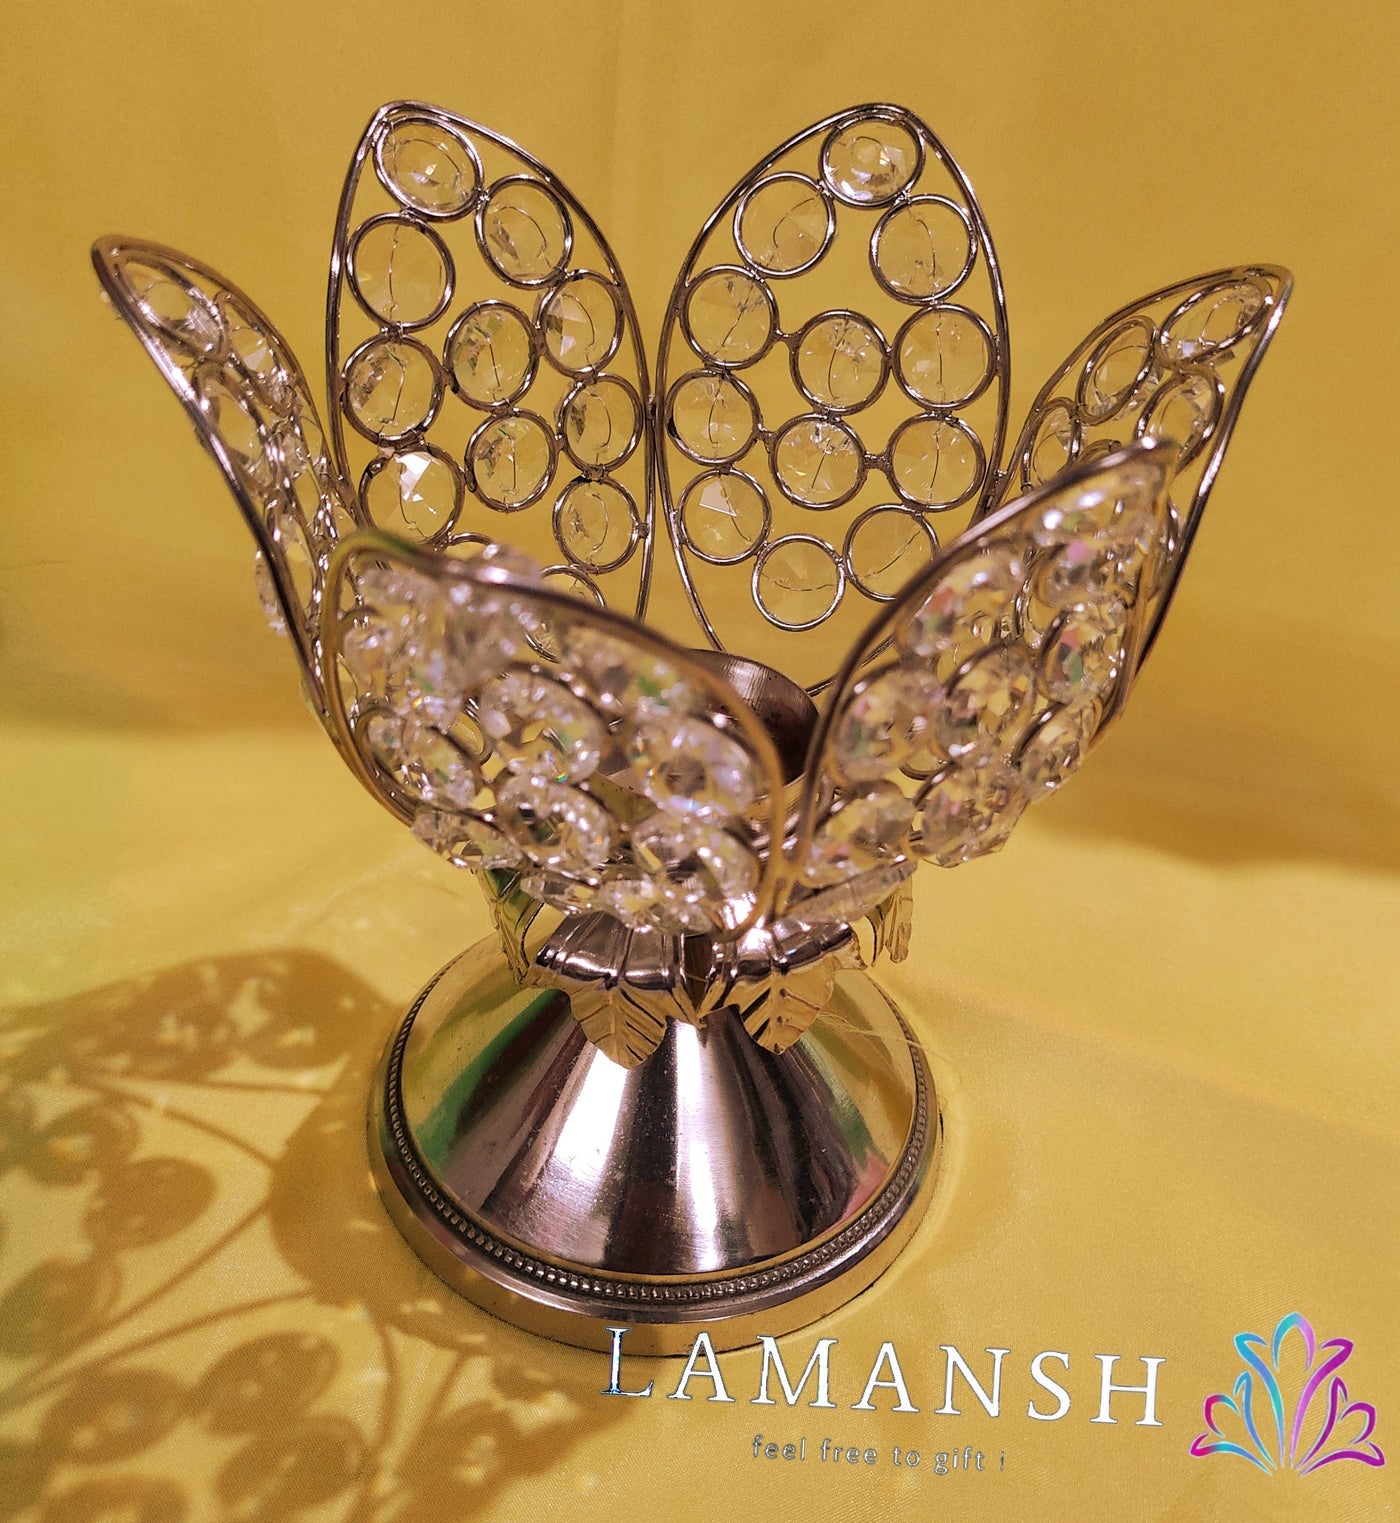 LAMANSH Gold & White / Metal & Crystal / 1 LAMANSH Pack of 1 Decorative Crystal Metal Tea Light Diya Candle Holder for Diwali and Home Decoration